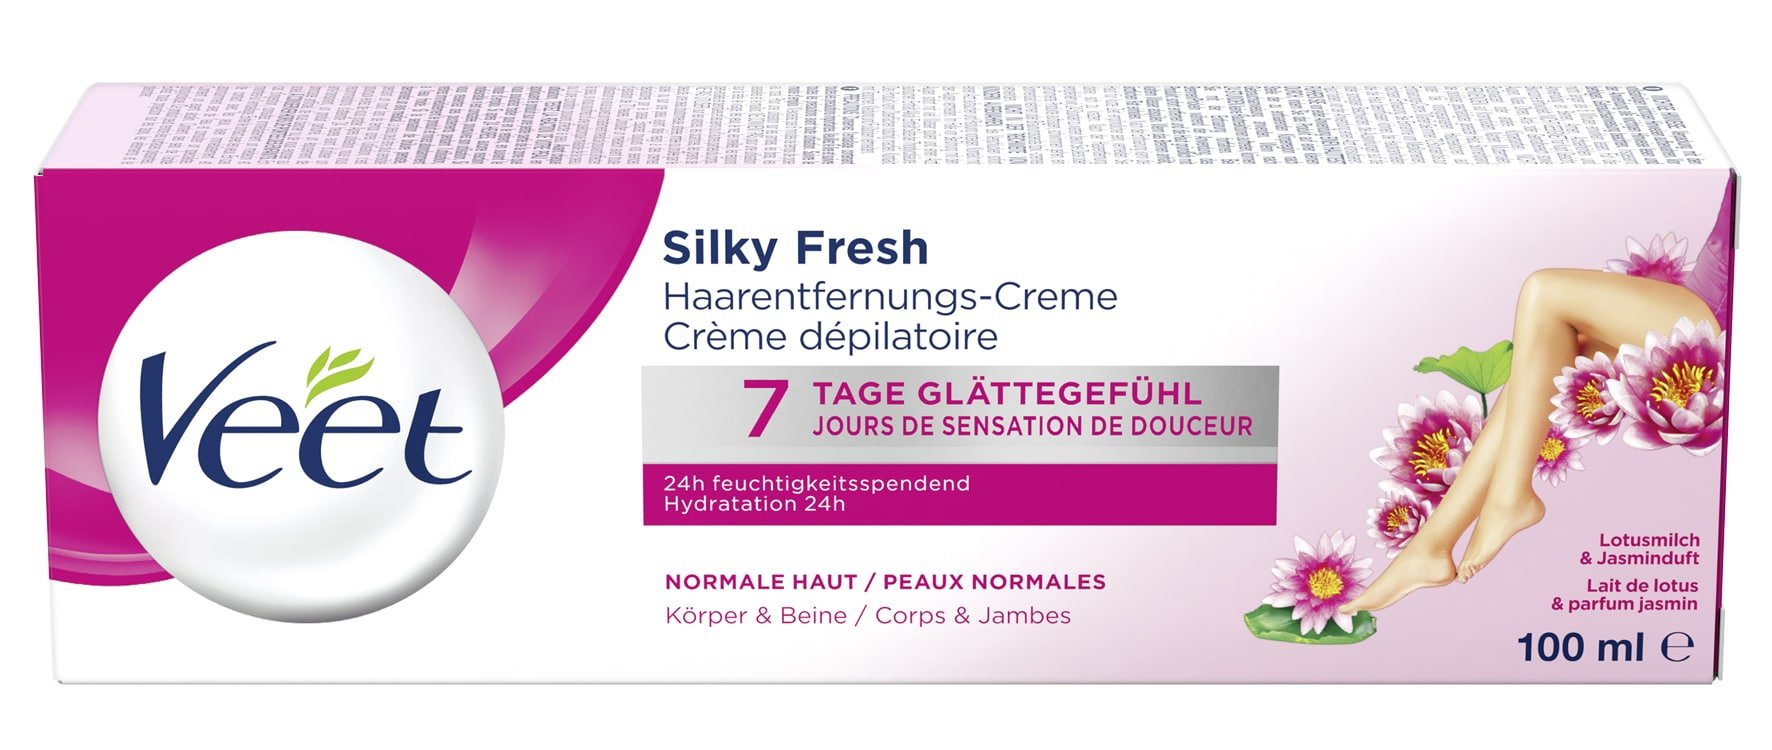 Veet Ontharingscrème met Silk & Fresh Technologie